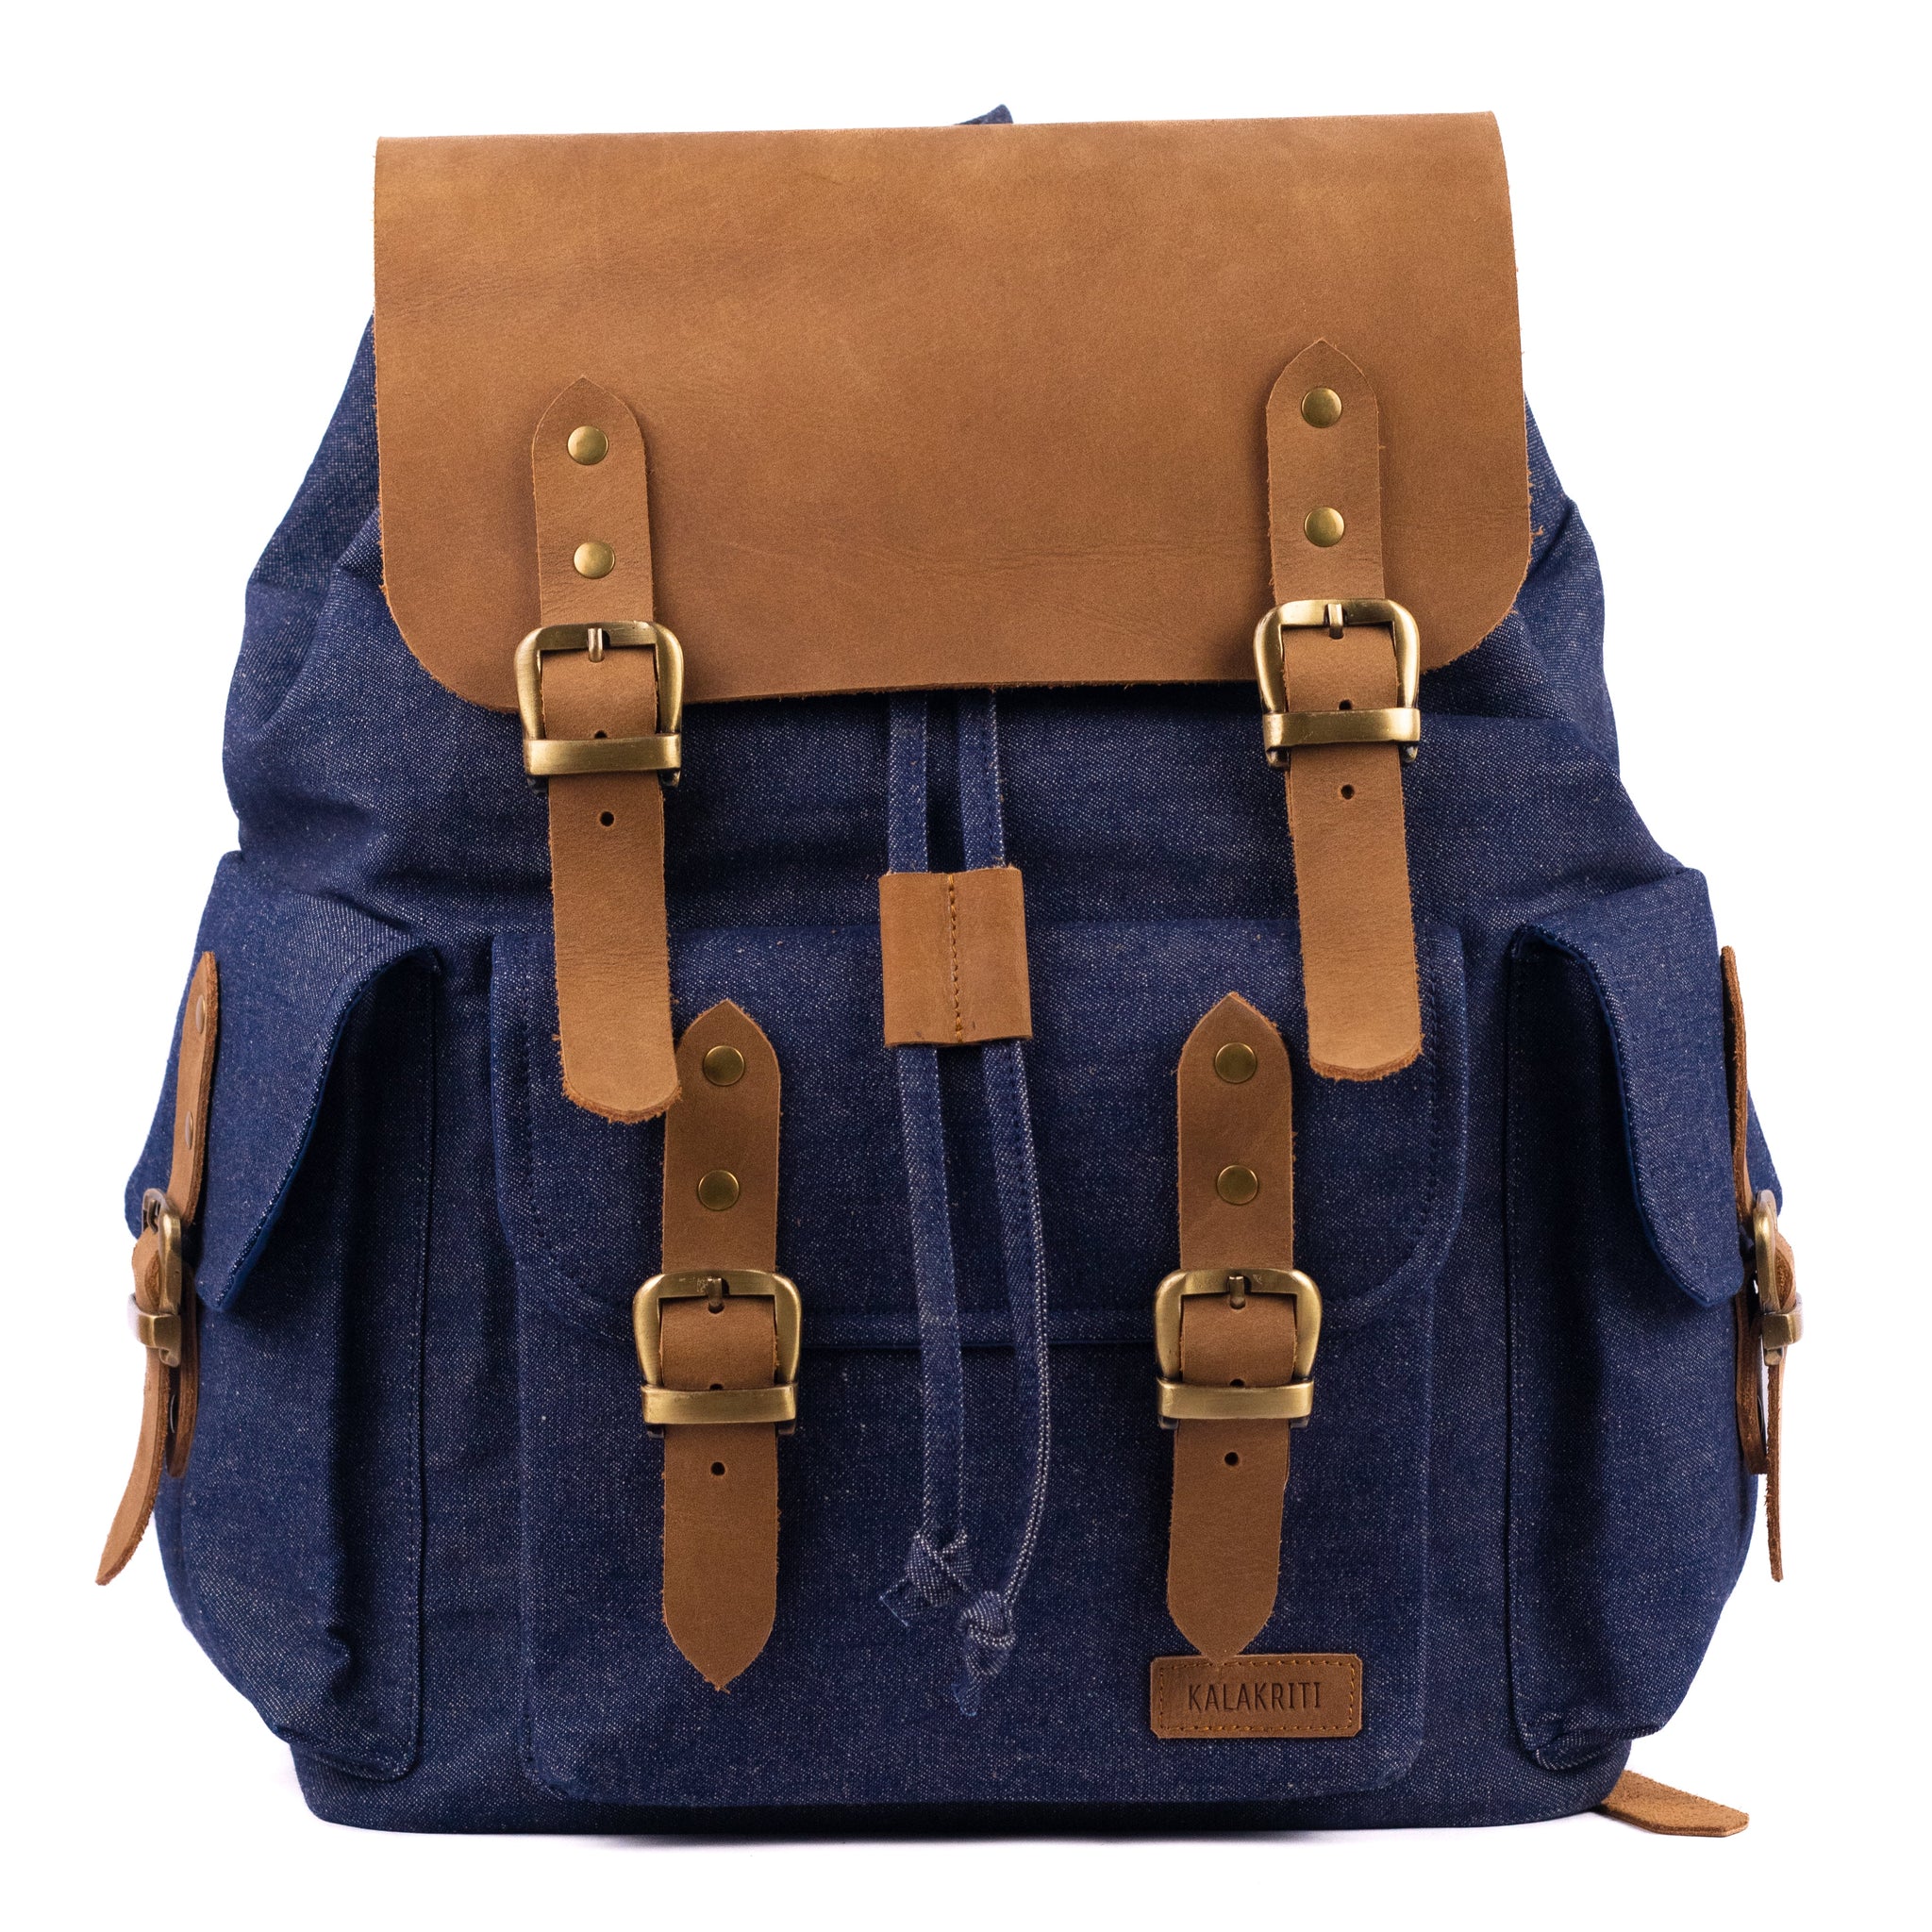 The Denim Backpack